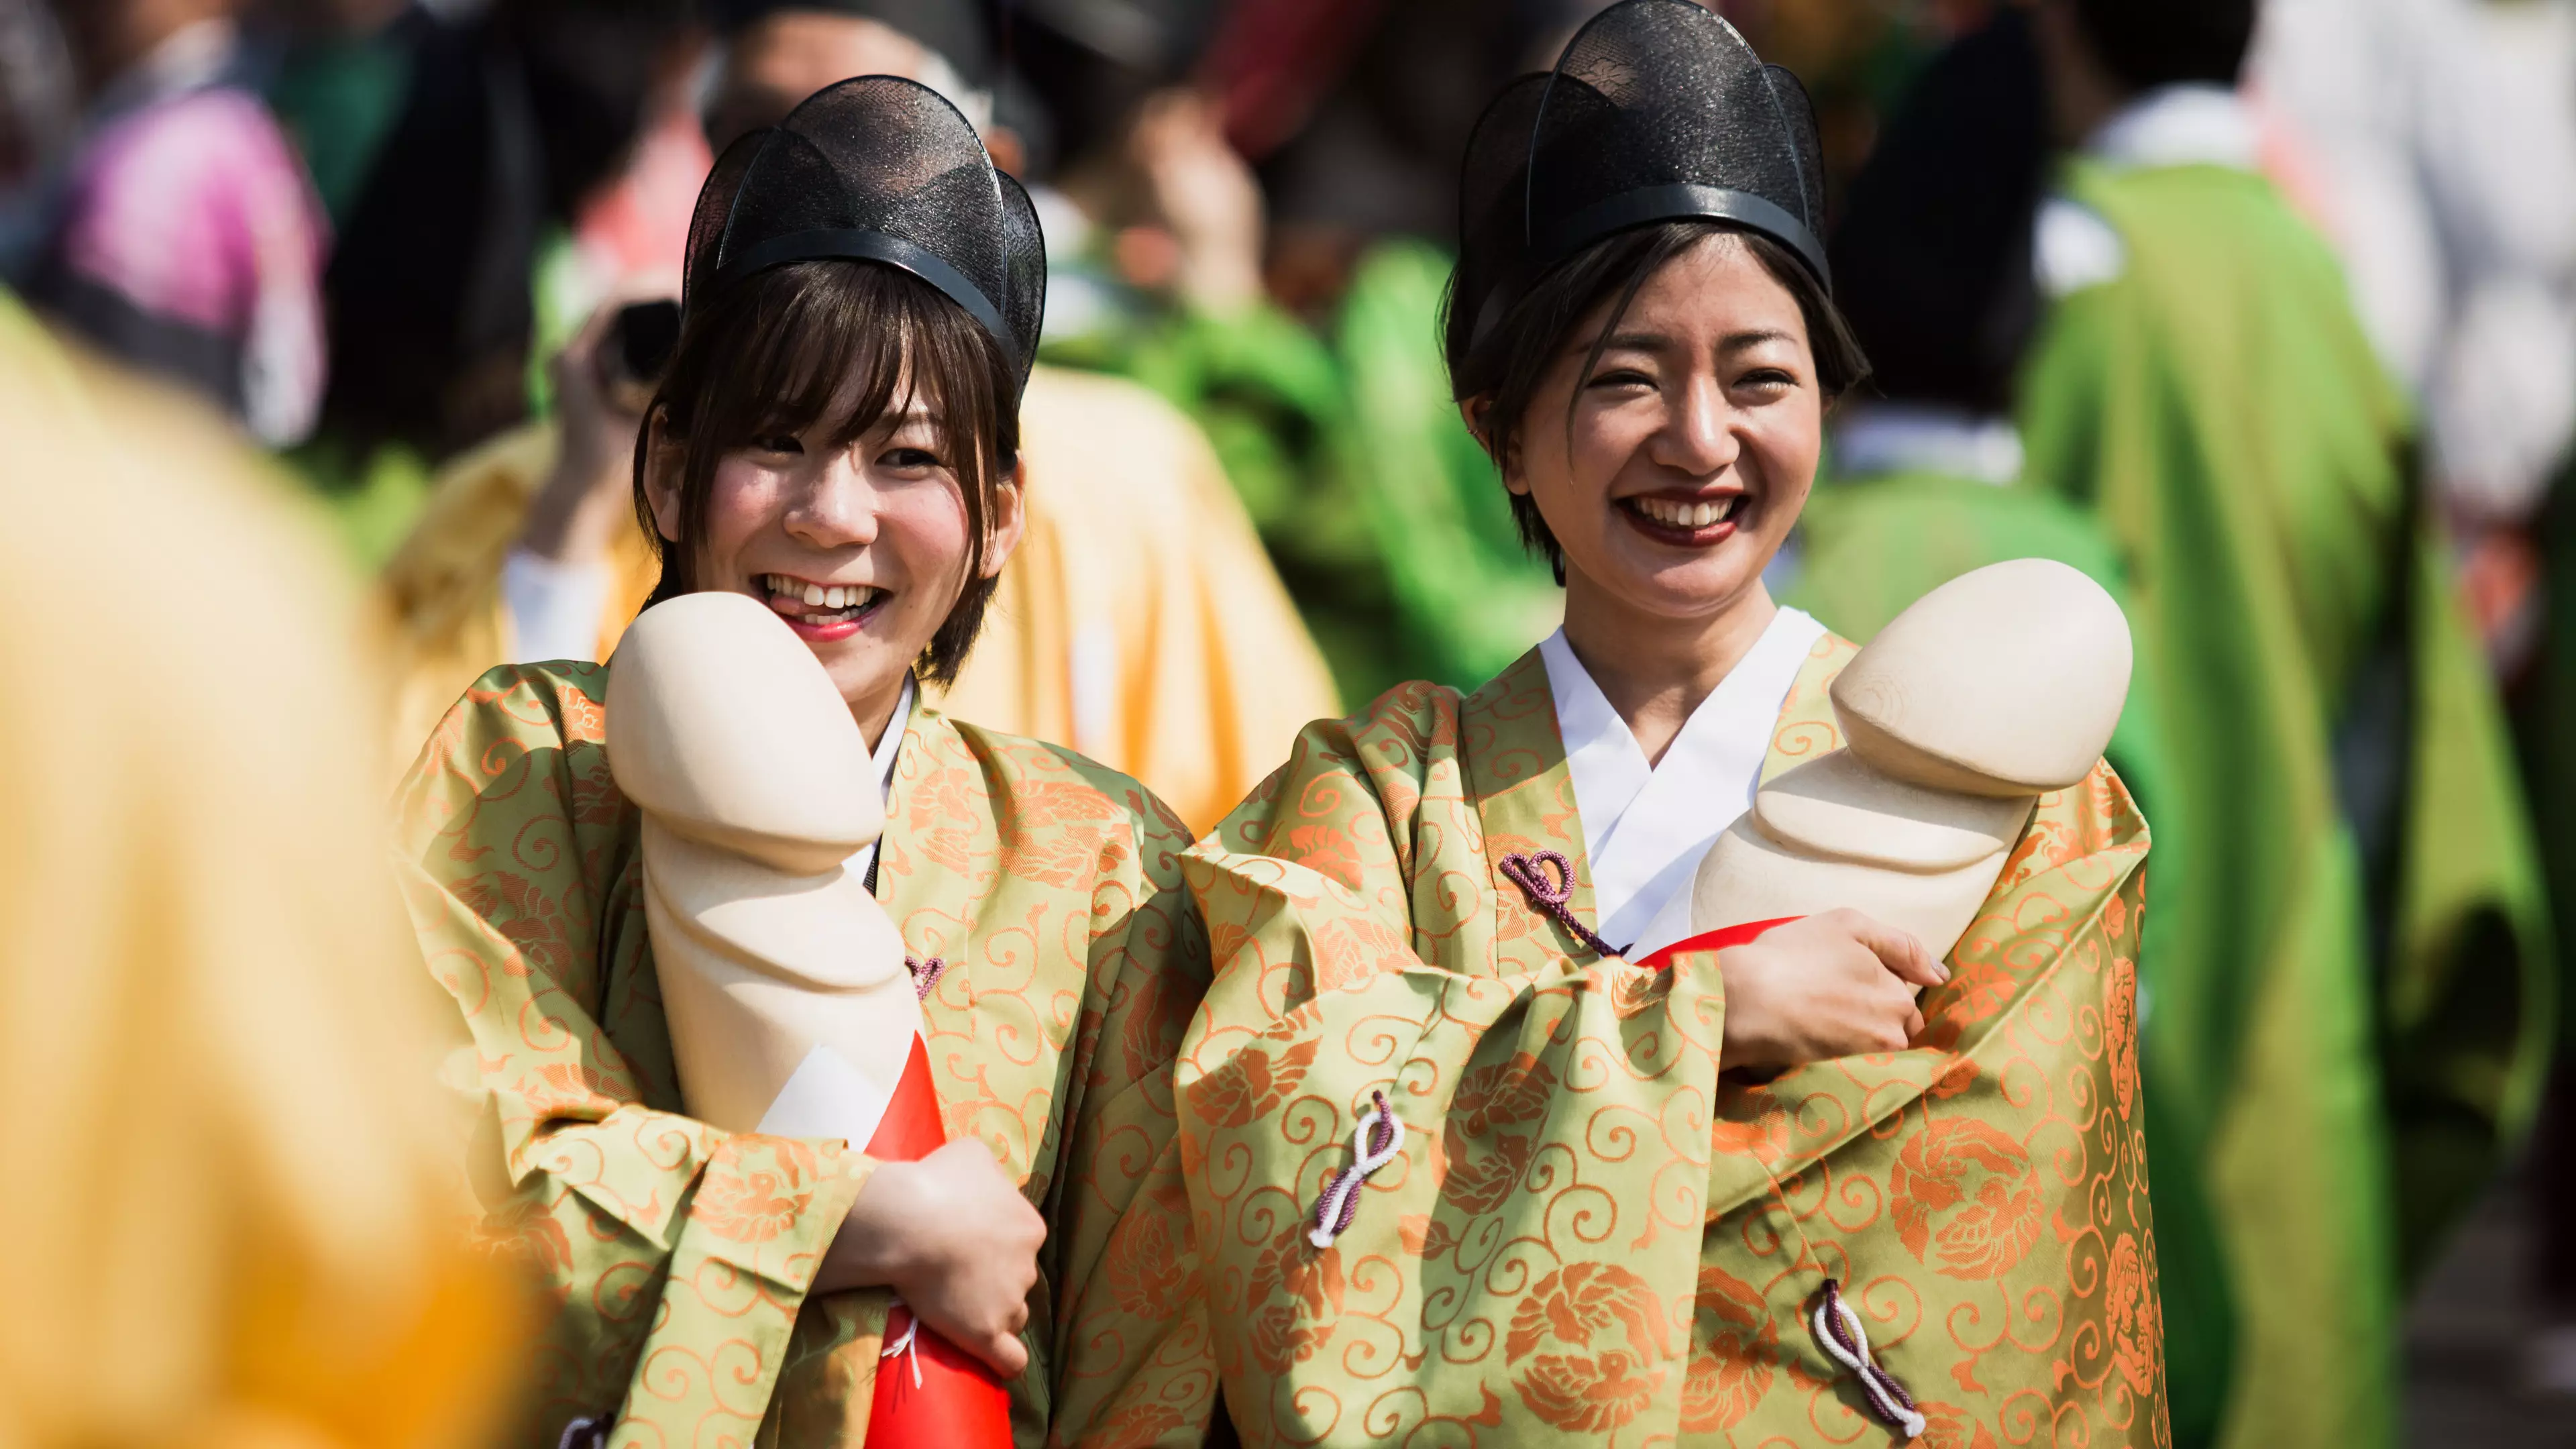 Thousands Gather Holding Giant Penises For Honen-Sai Festival In Japan